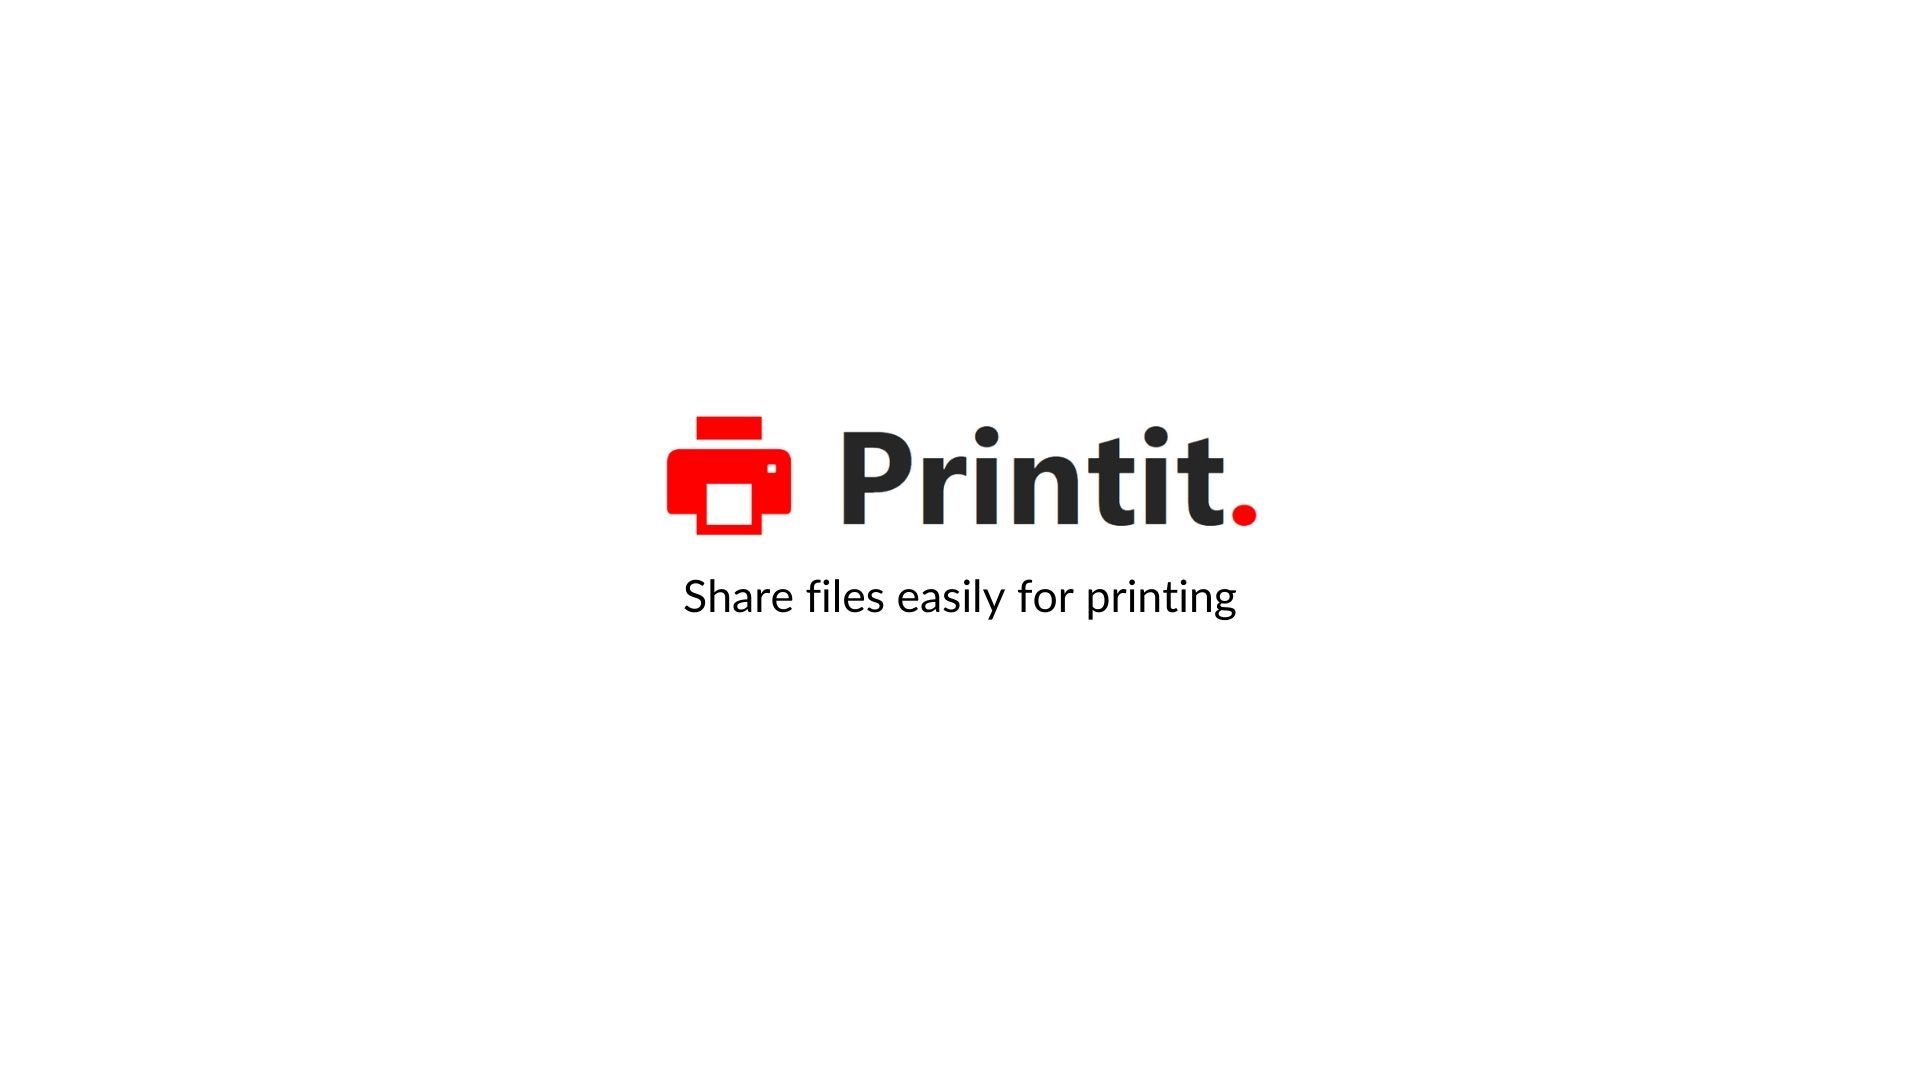 About Printit